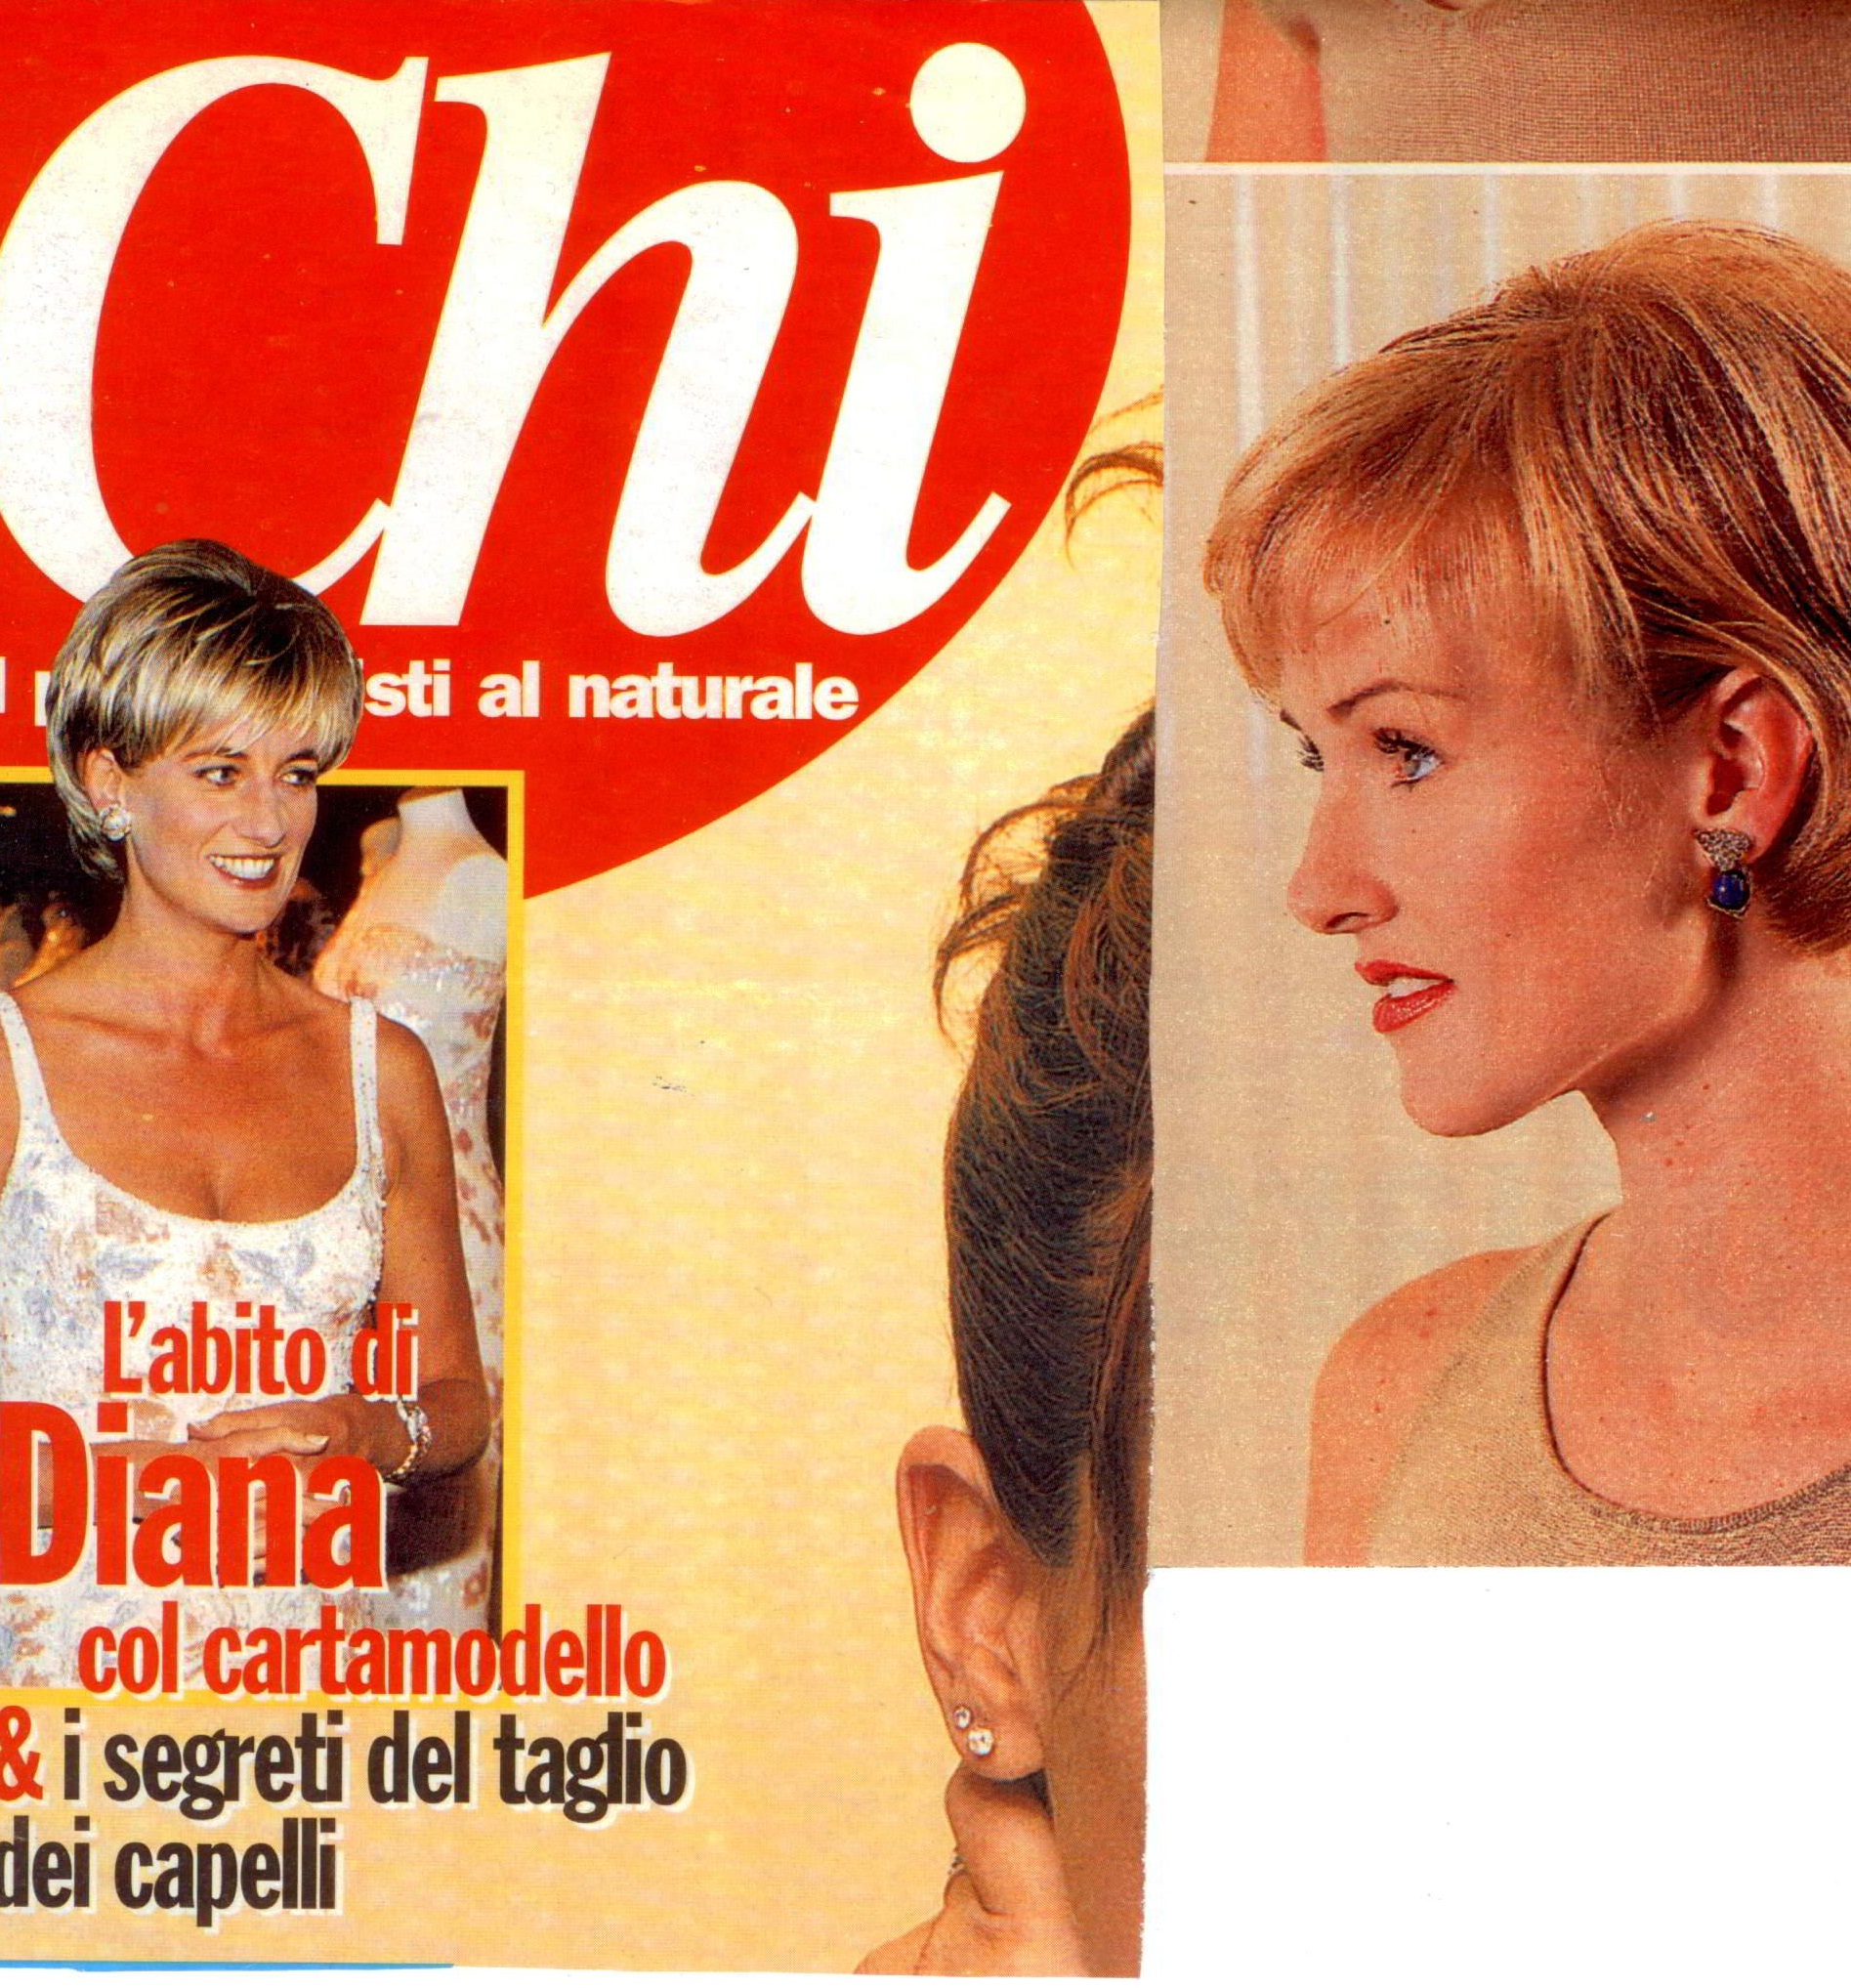 Chi Magazine, Milan. Italy